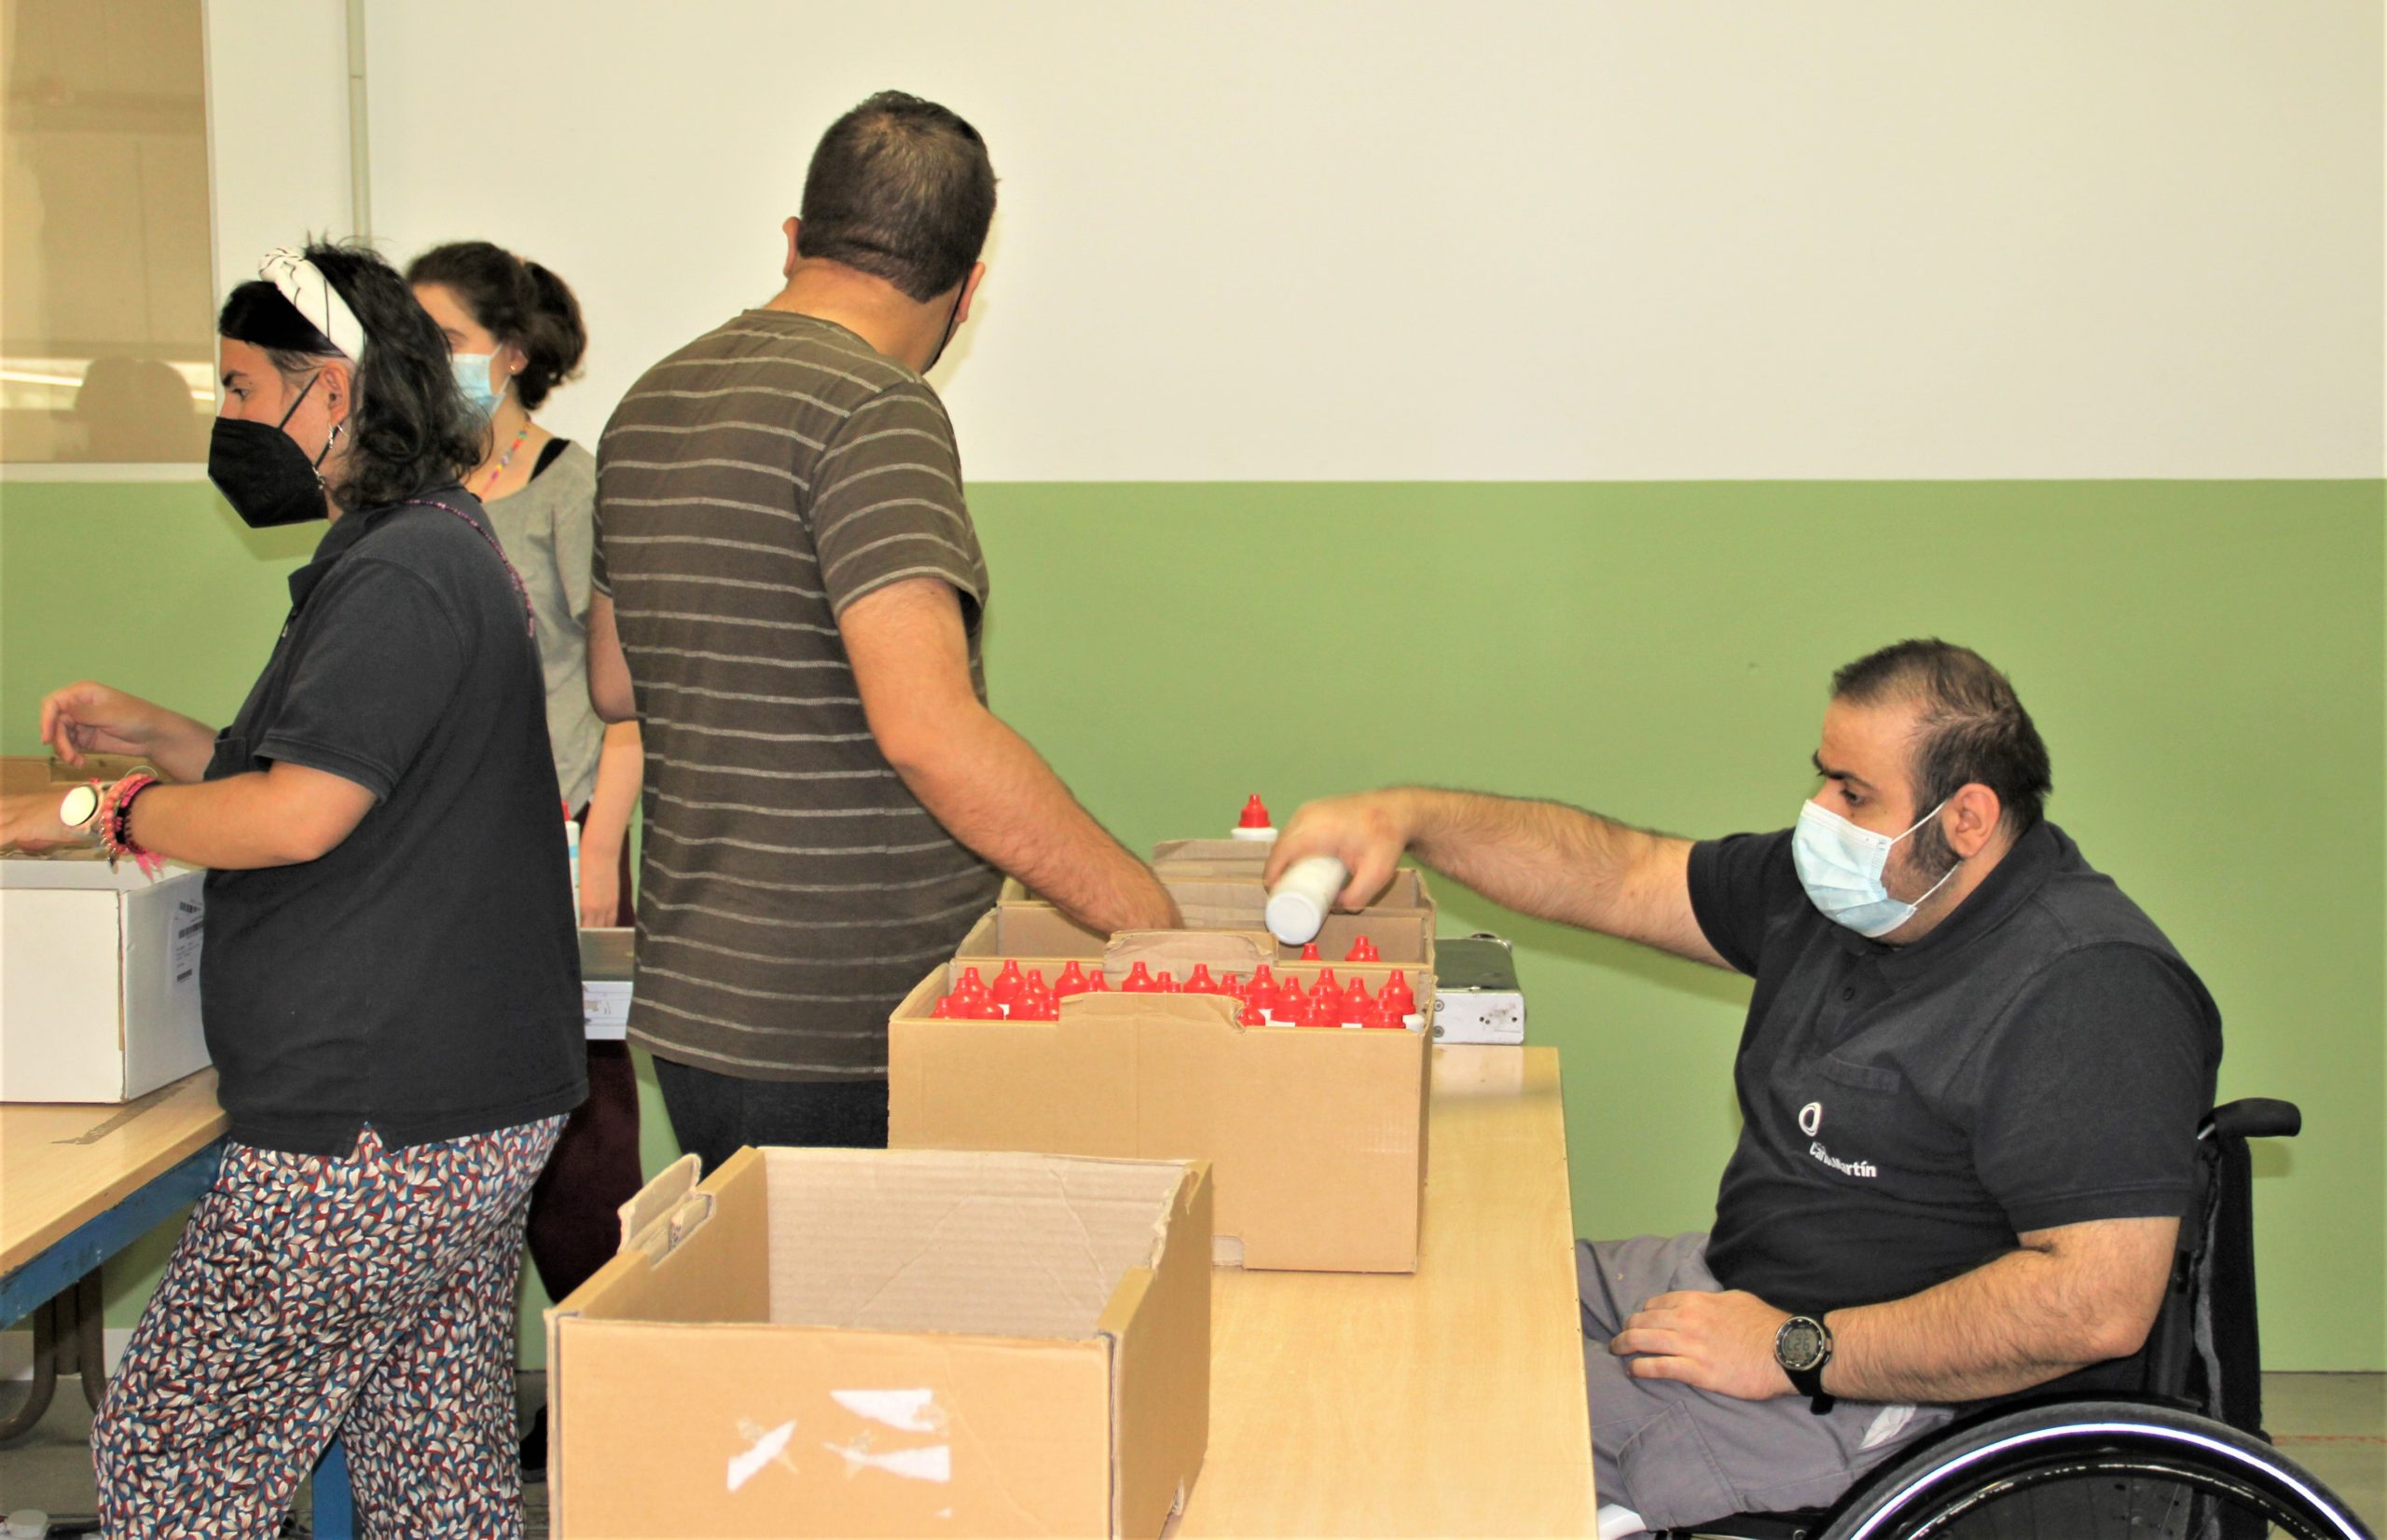 Centro de empleo de Fundación Raíles donde guardan un pedido en cajas de cartón